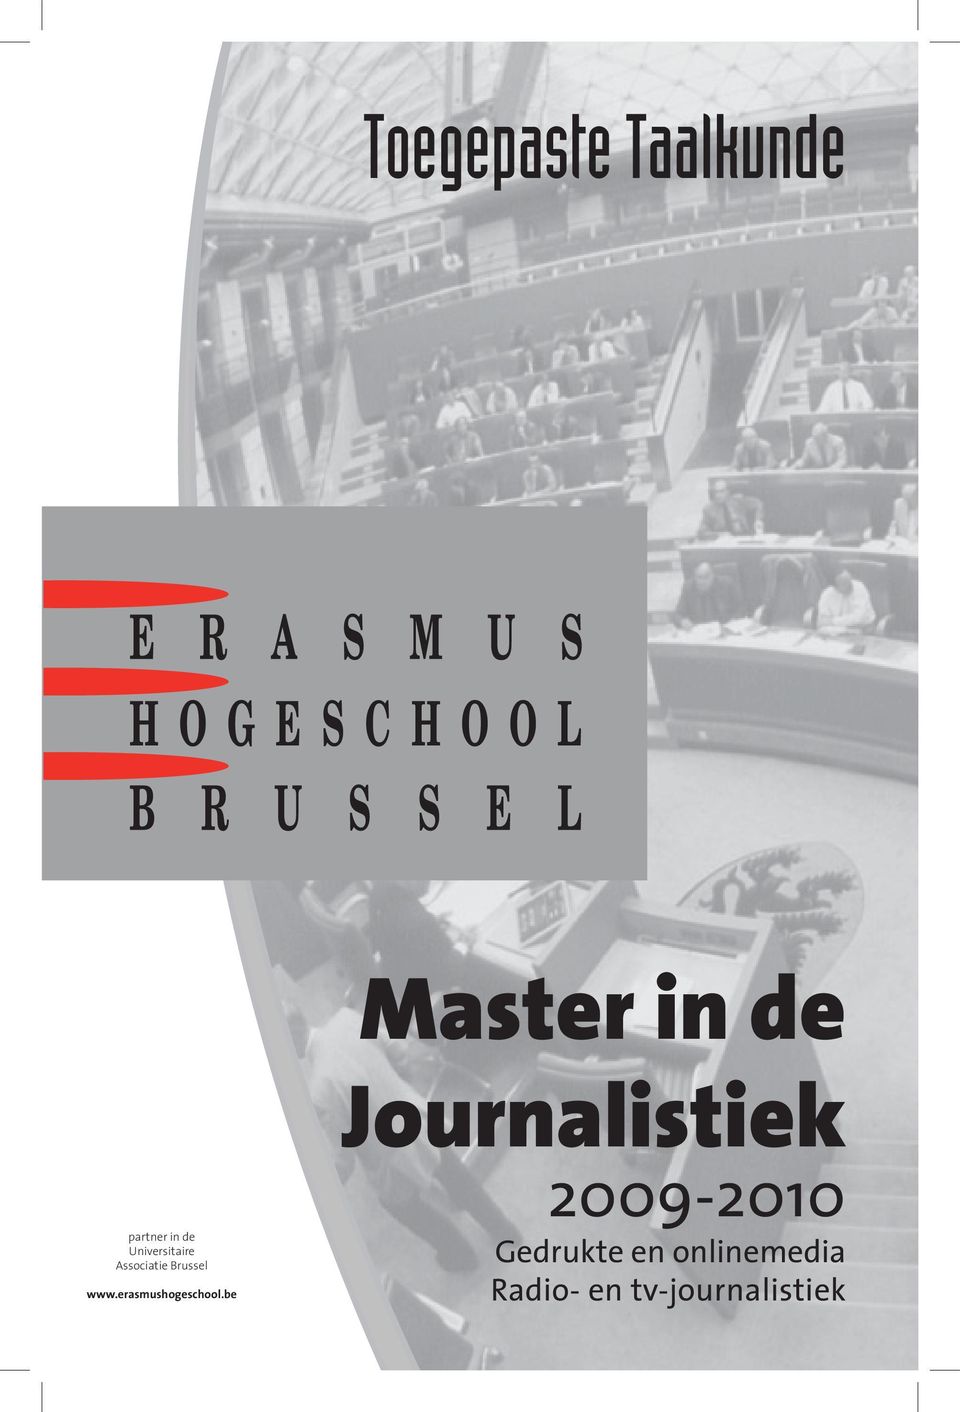 Universitaire Associatie Brussel www.